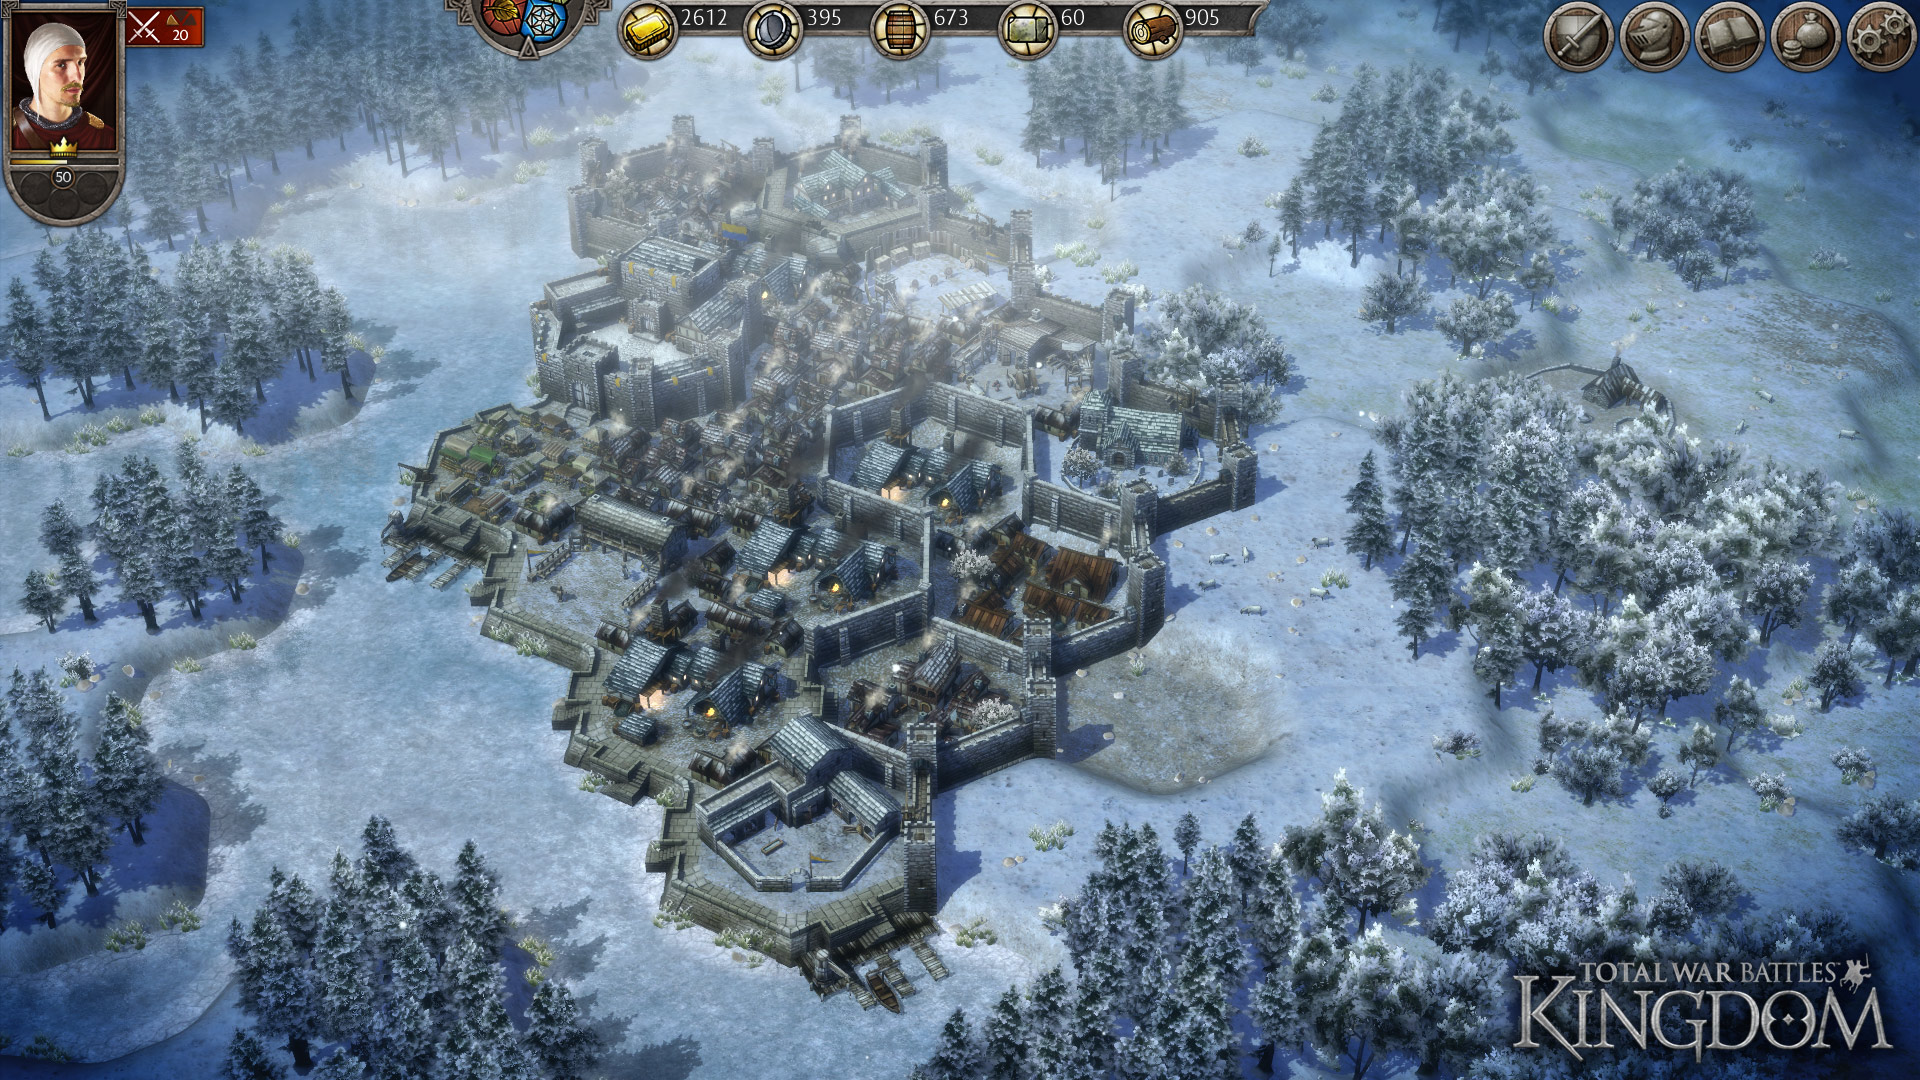 Total War Battles: Kingdom Game Review